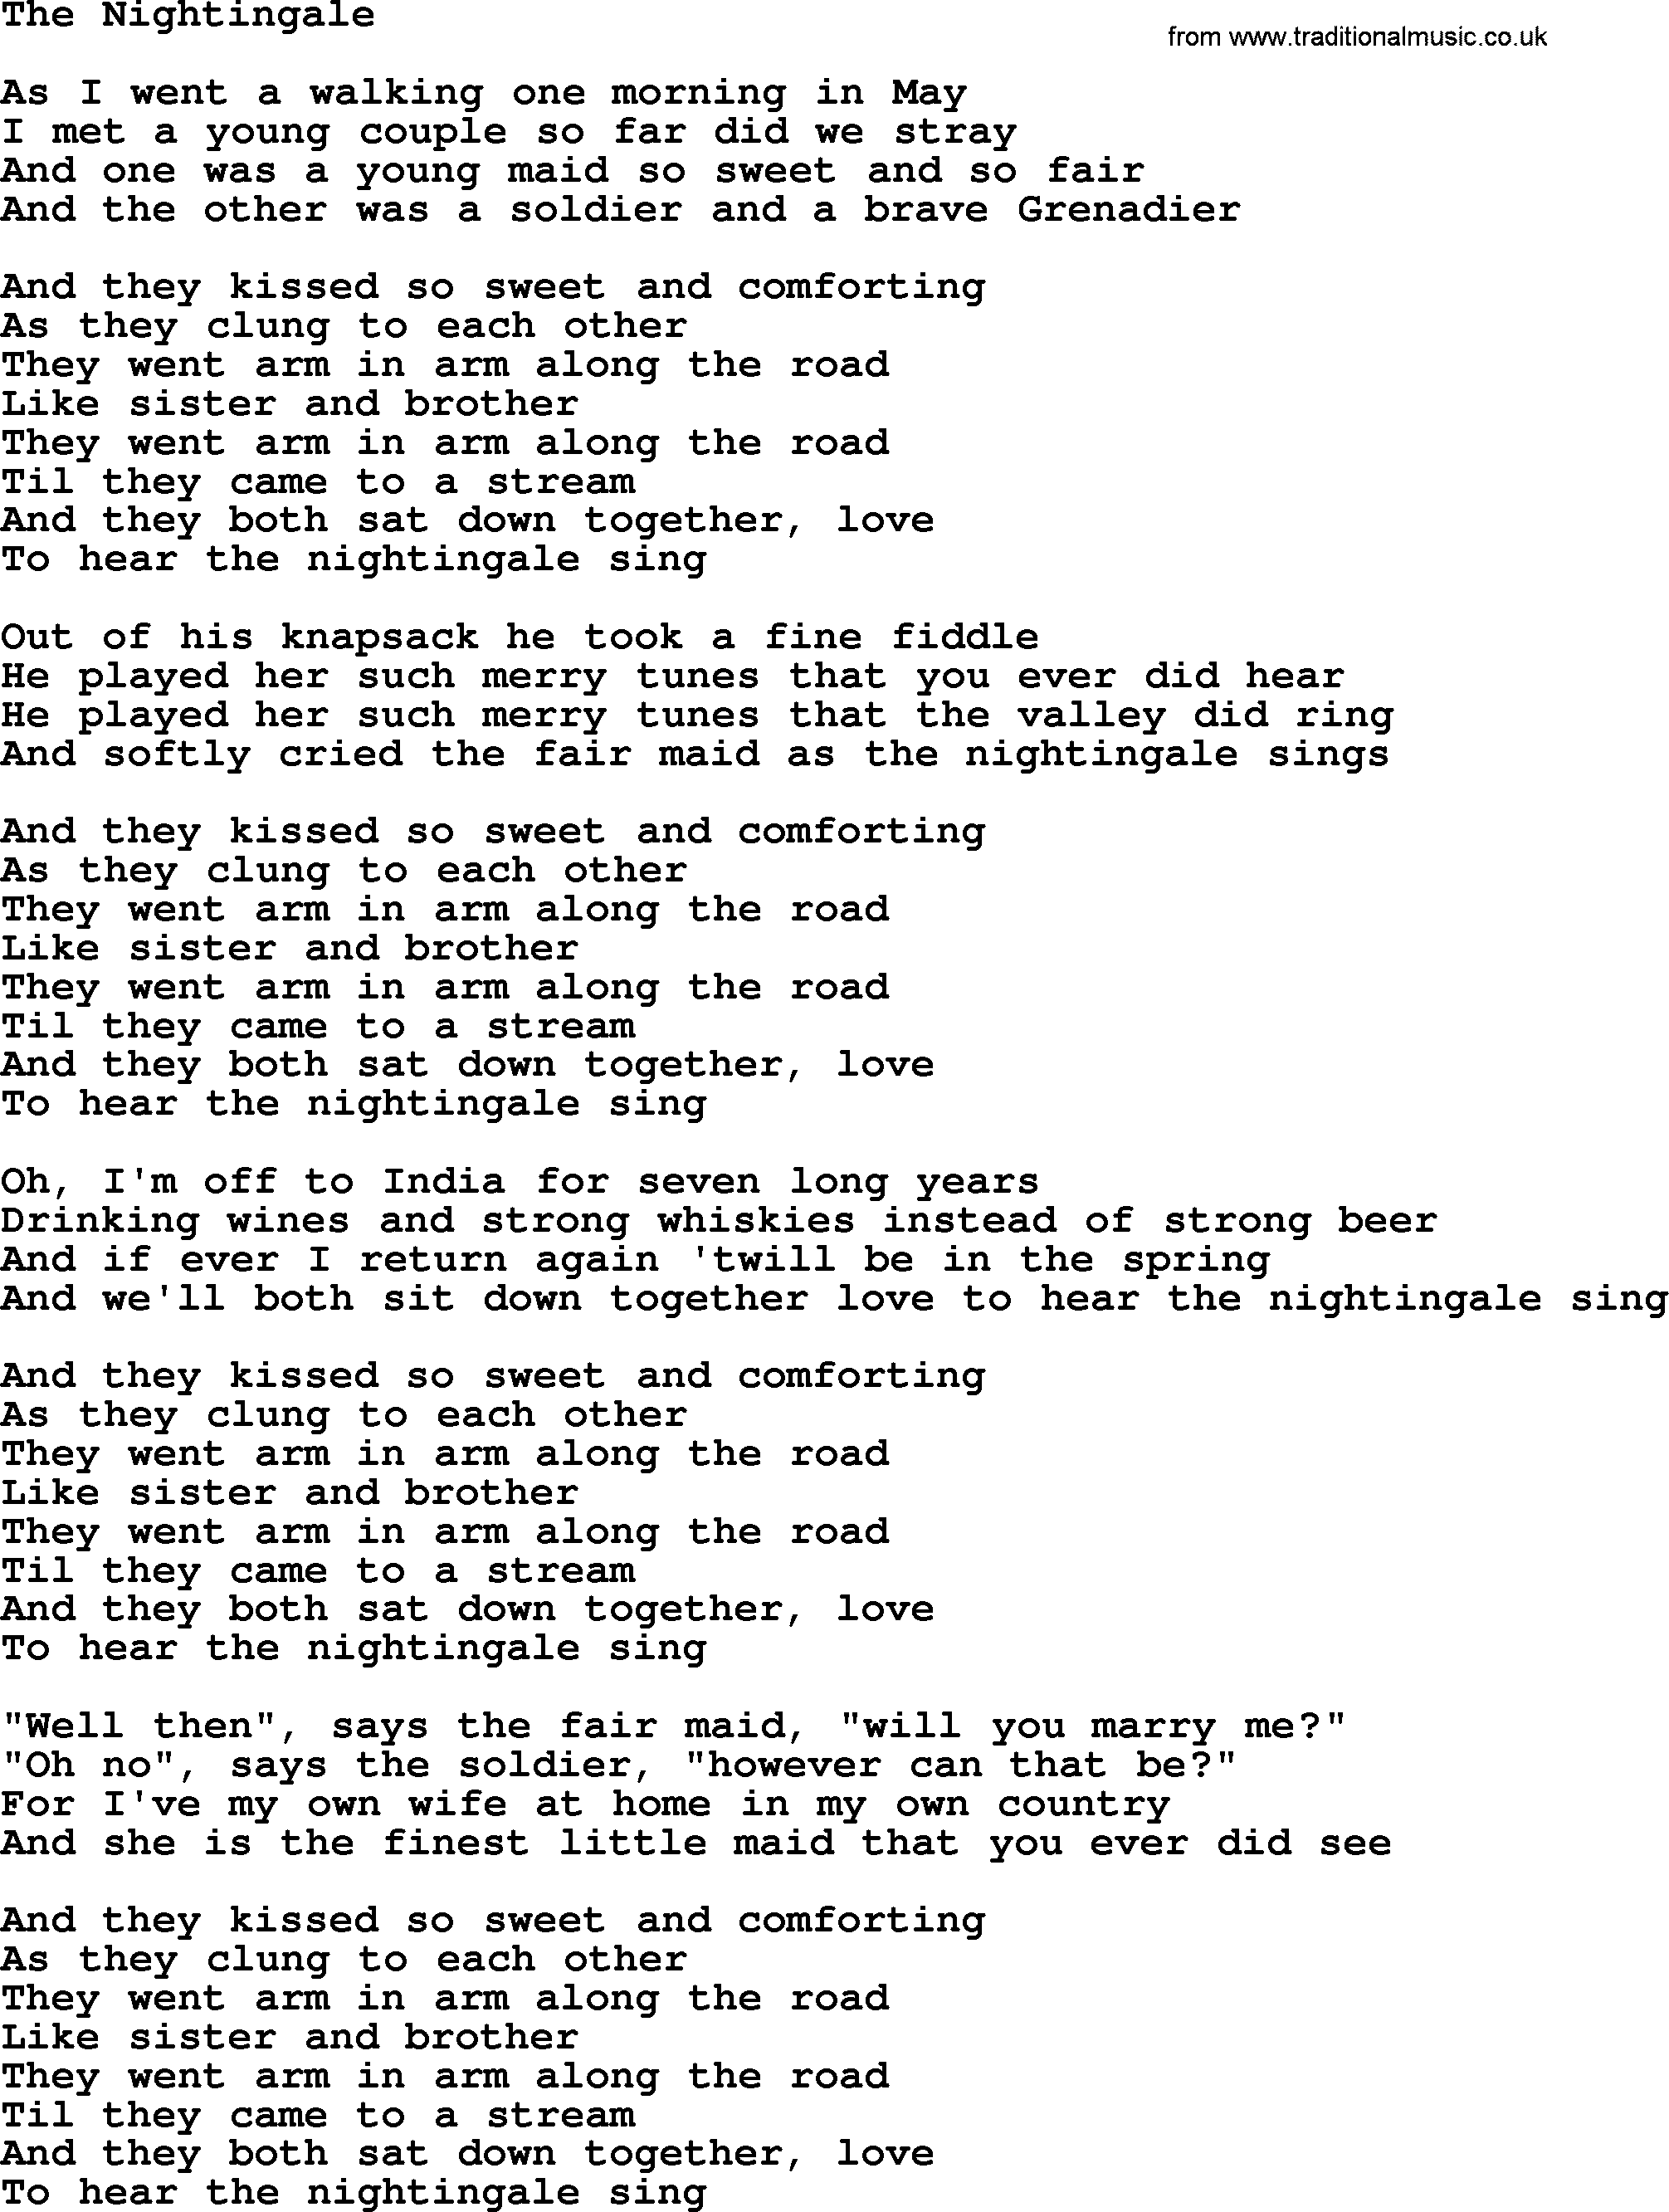 The Dubliners song: The Nightingale, lyrics